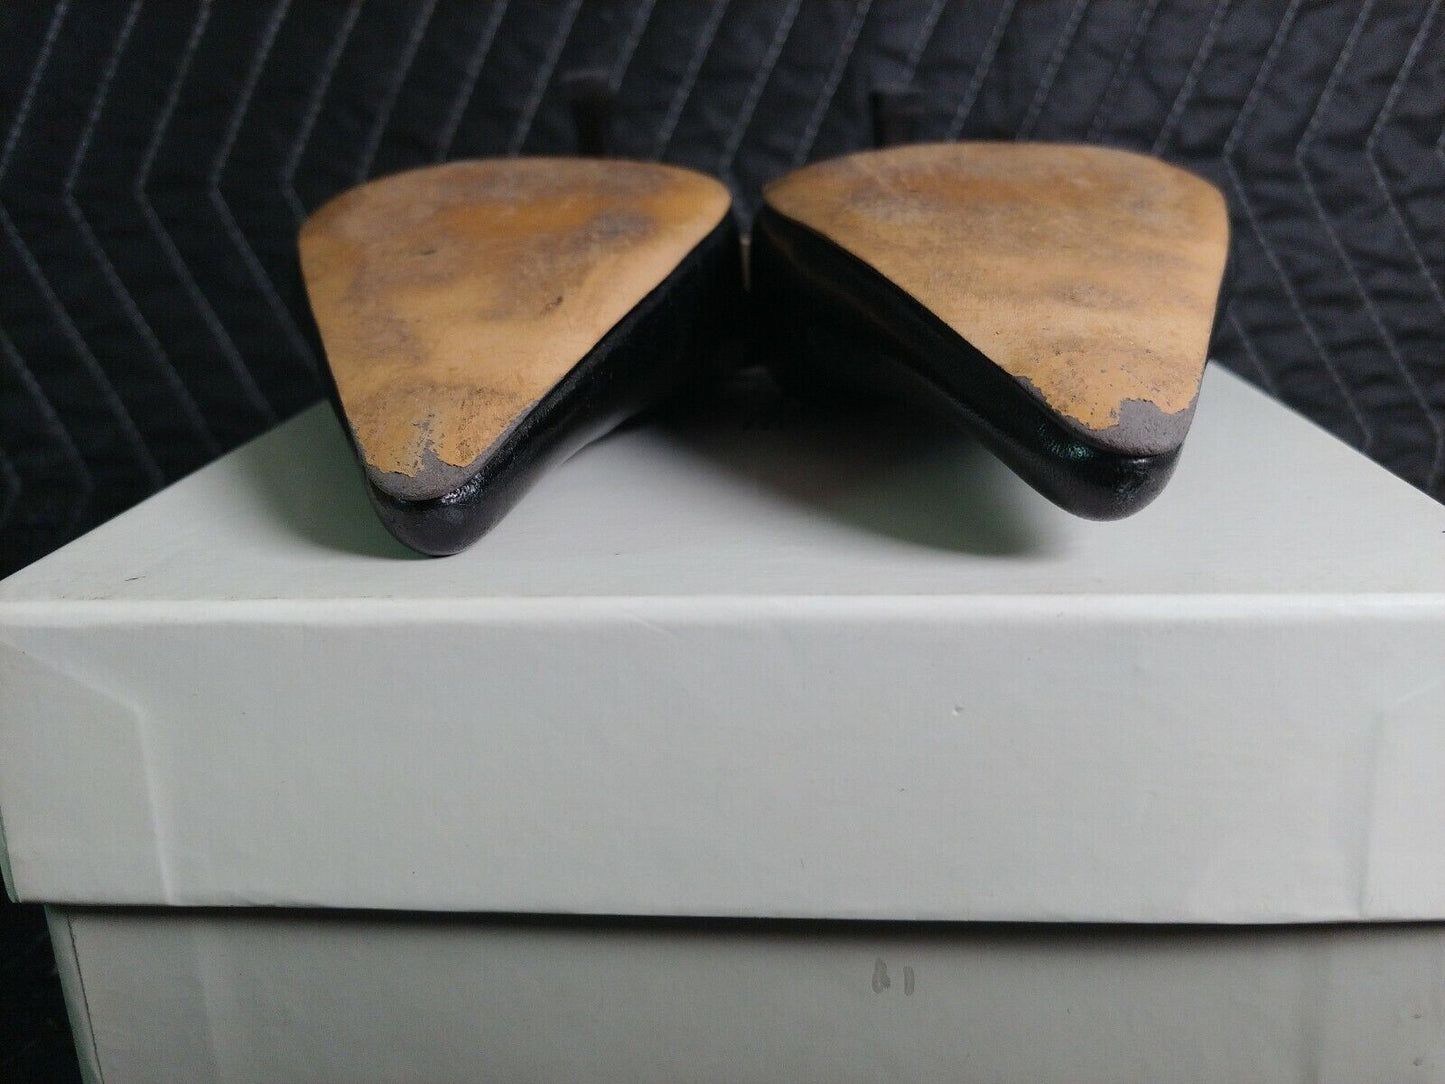 BALENCIAGA Black Knife Leather Pointed Heel - Size 38